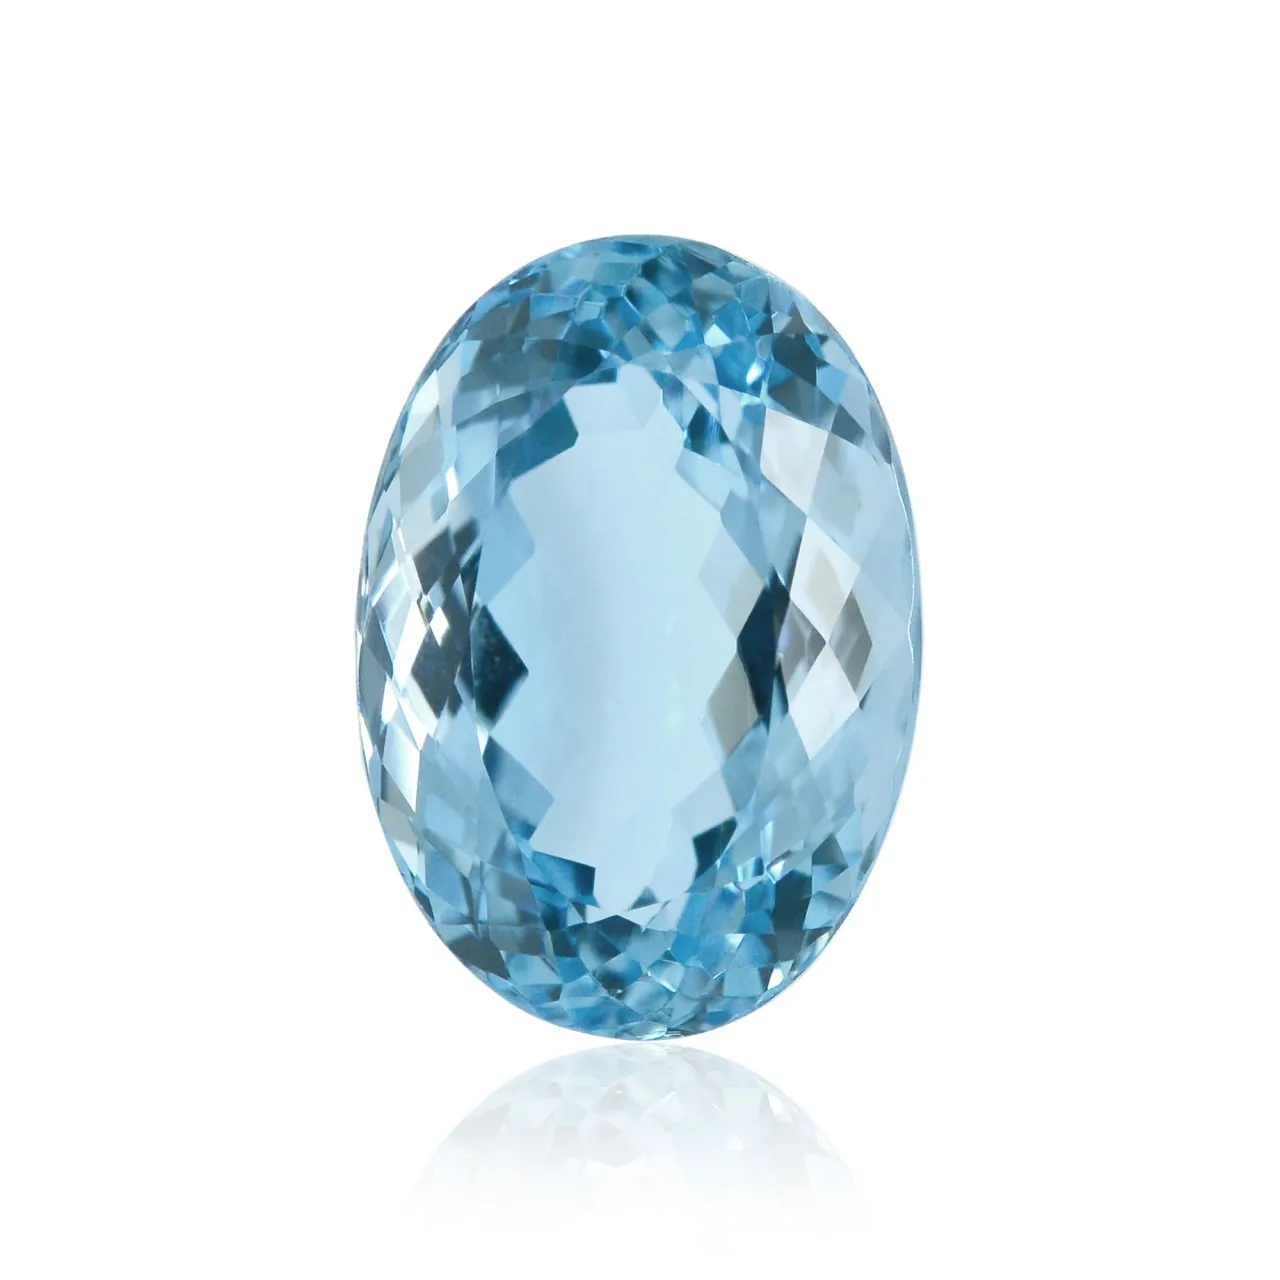 Loose Aquamarine For Jewelry Making Aquamarine Cut Stone Pear Shape Aquamarine Gemstone Natural Aquamarine Loose Cut Stone